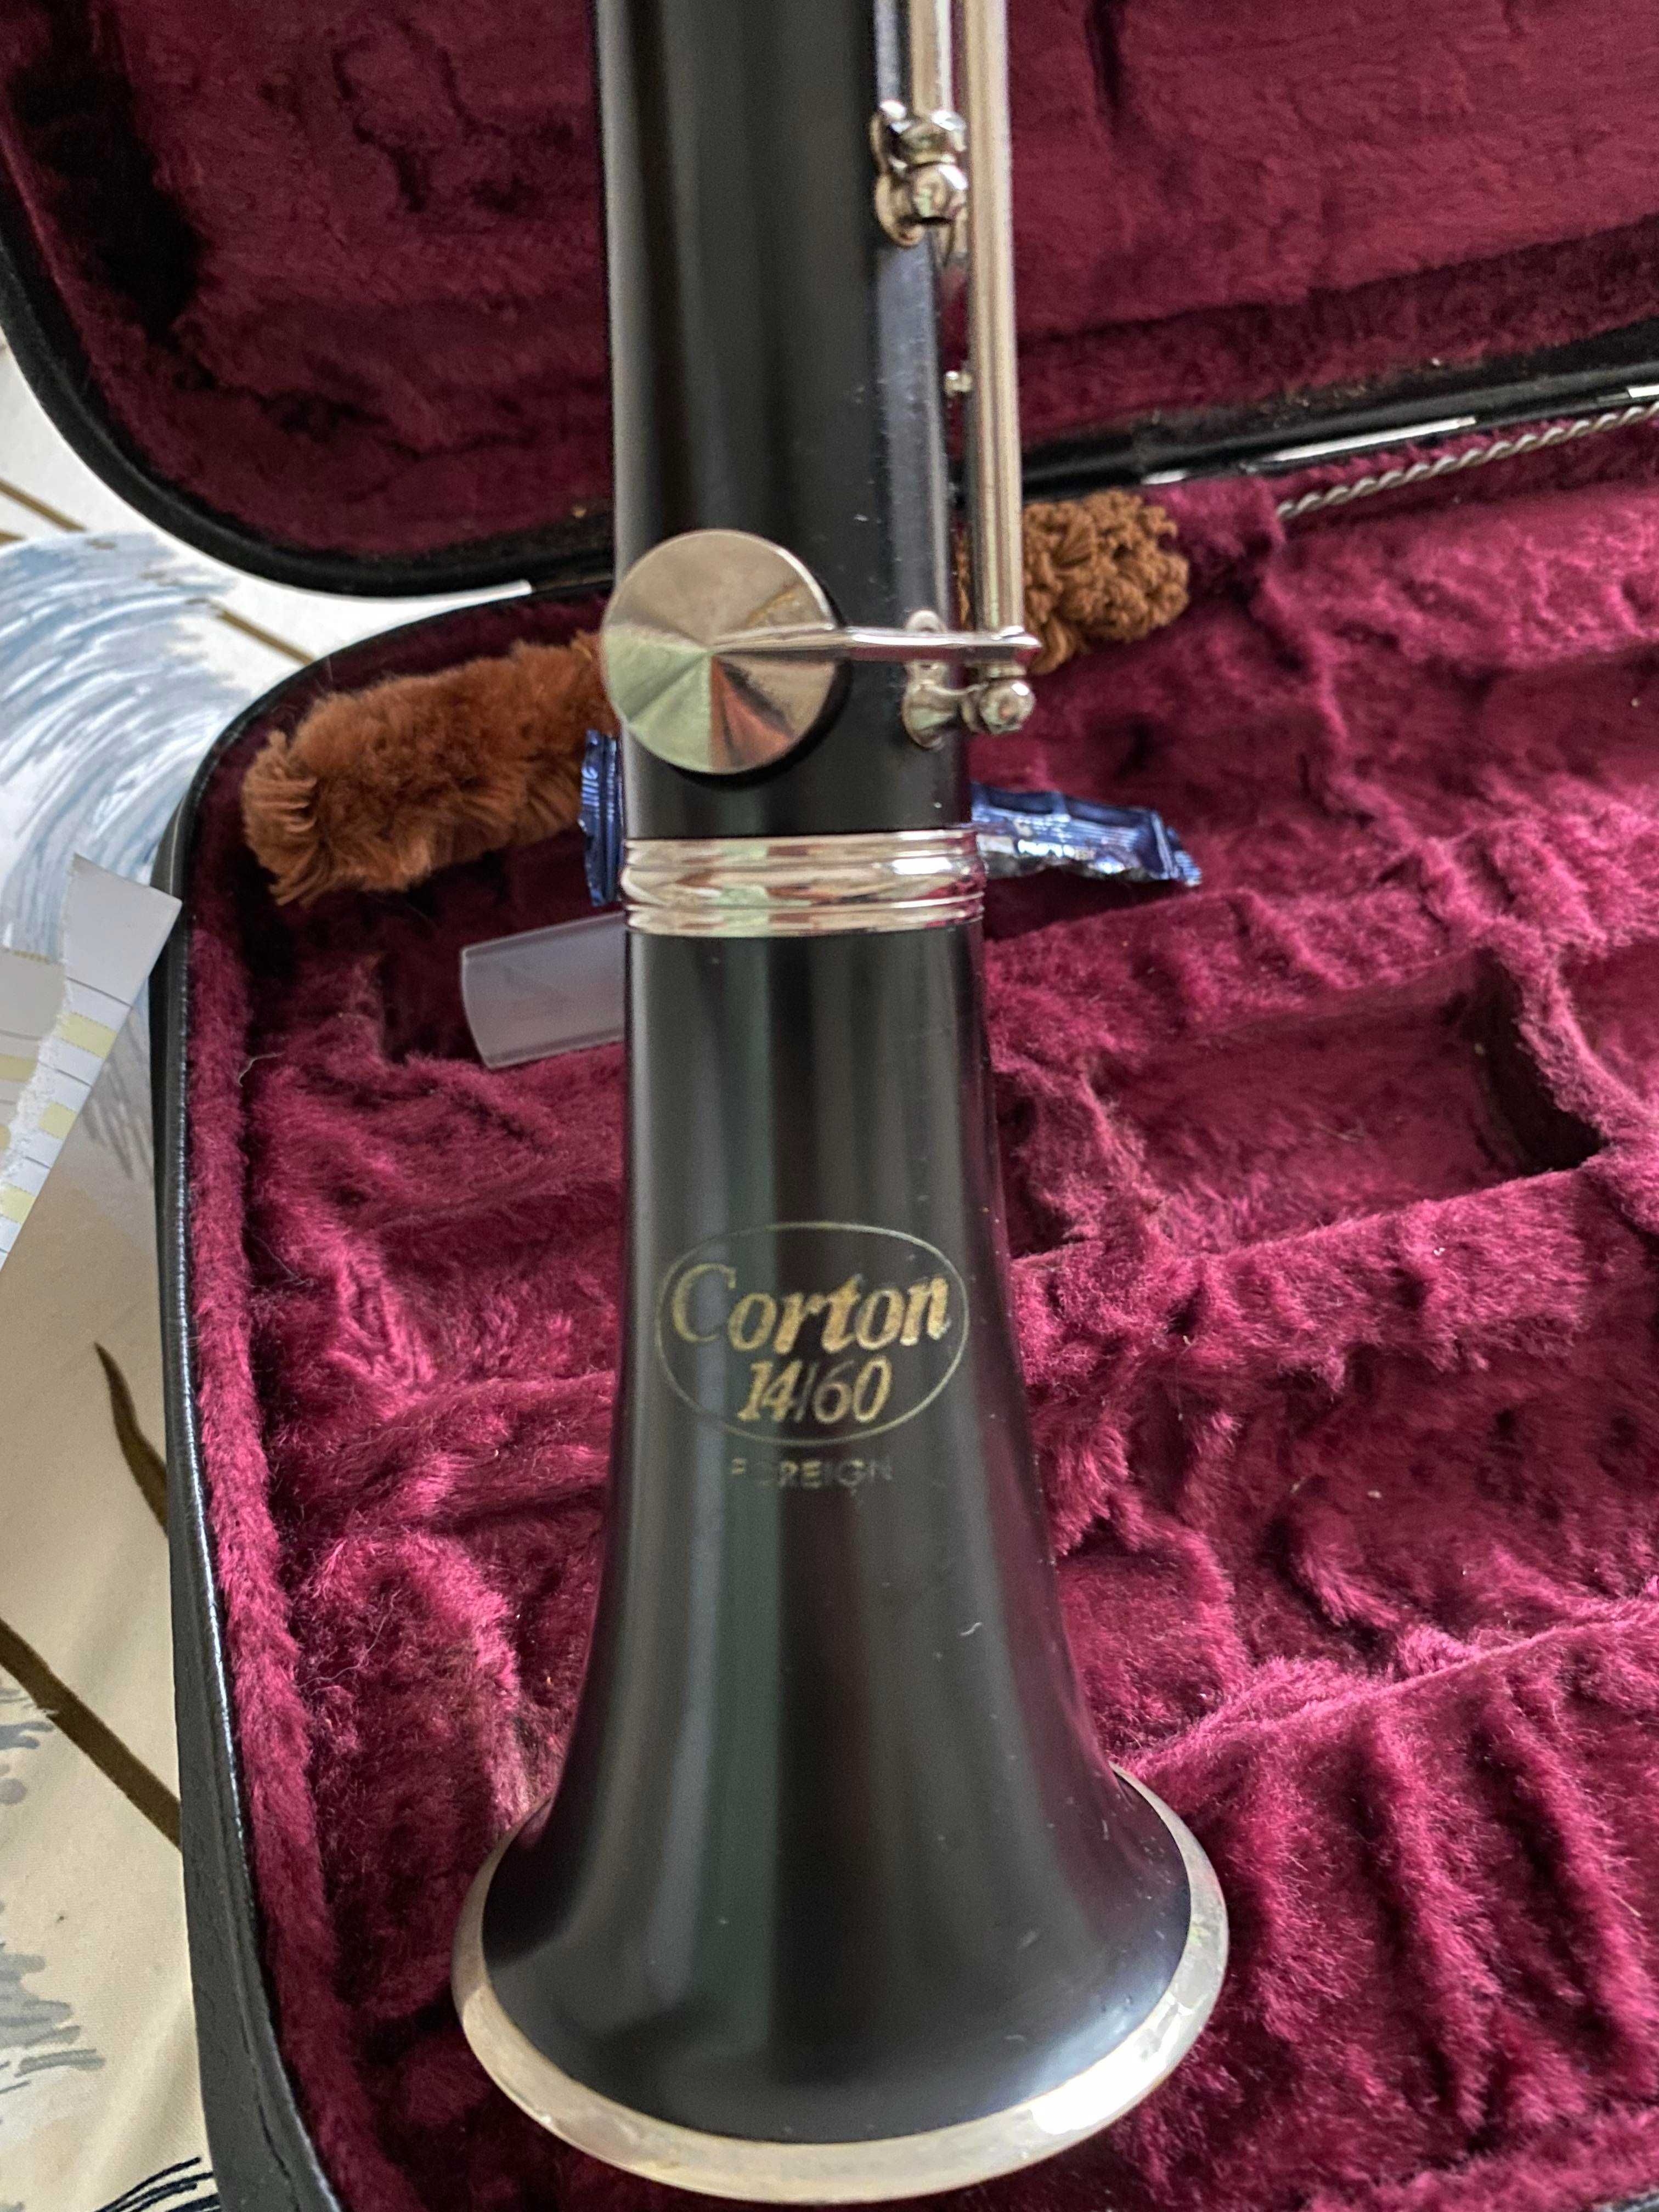 Corton 14/60 clarinet